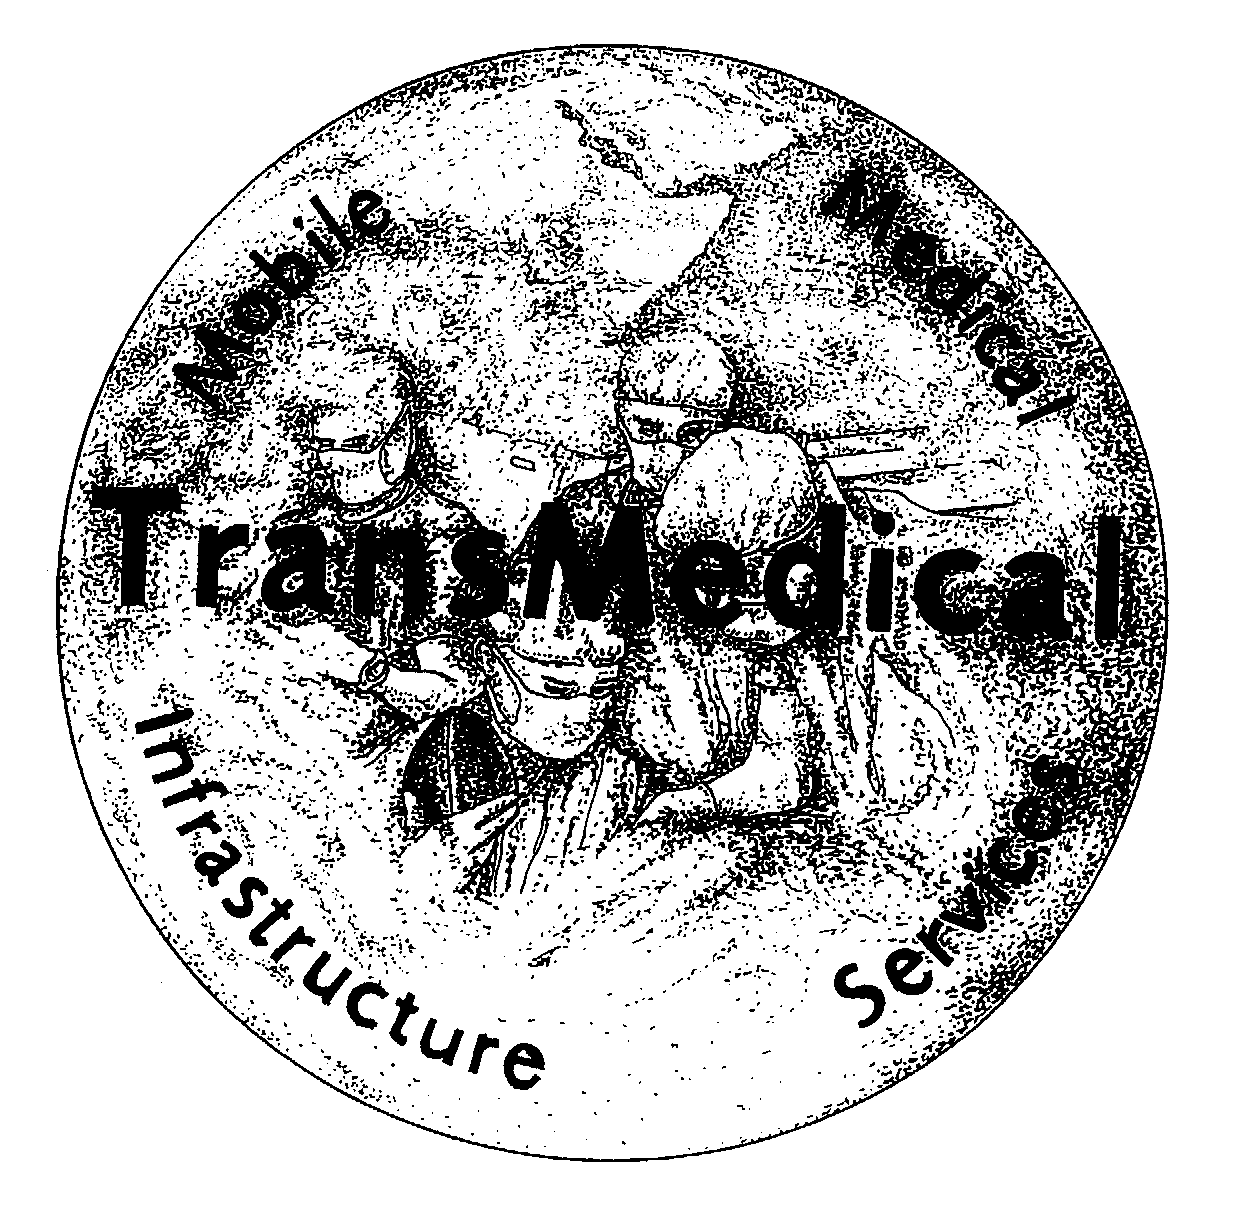  TRANSMEDICAL MOBILE MEDICAL INFRASTRUCTURE SERVICES